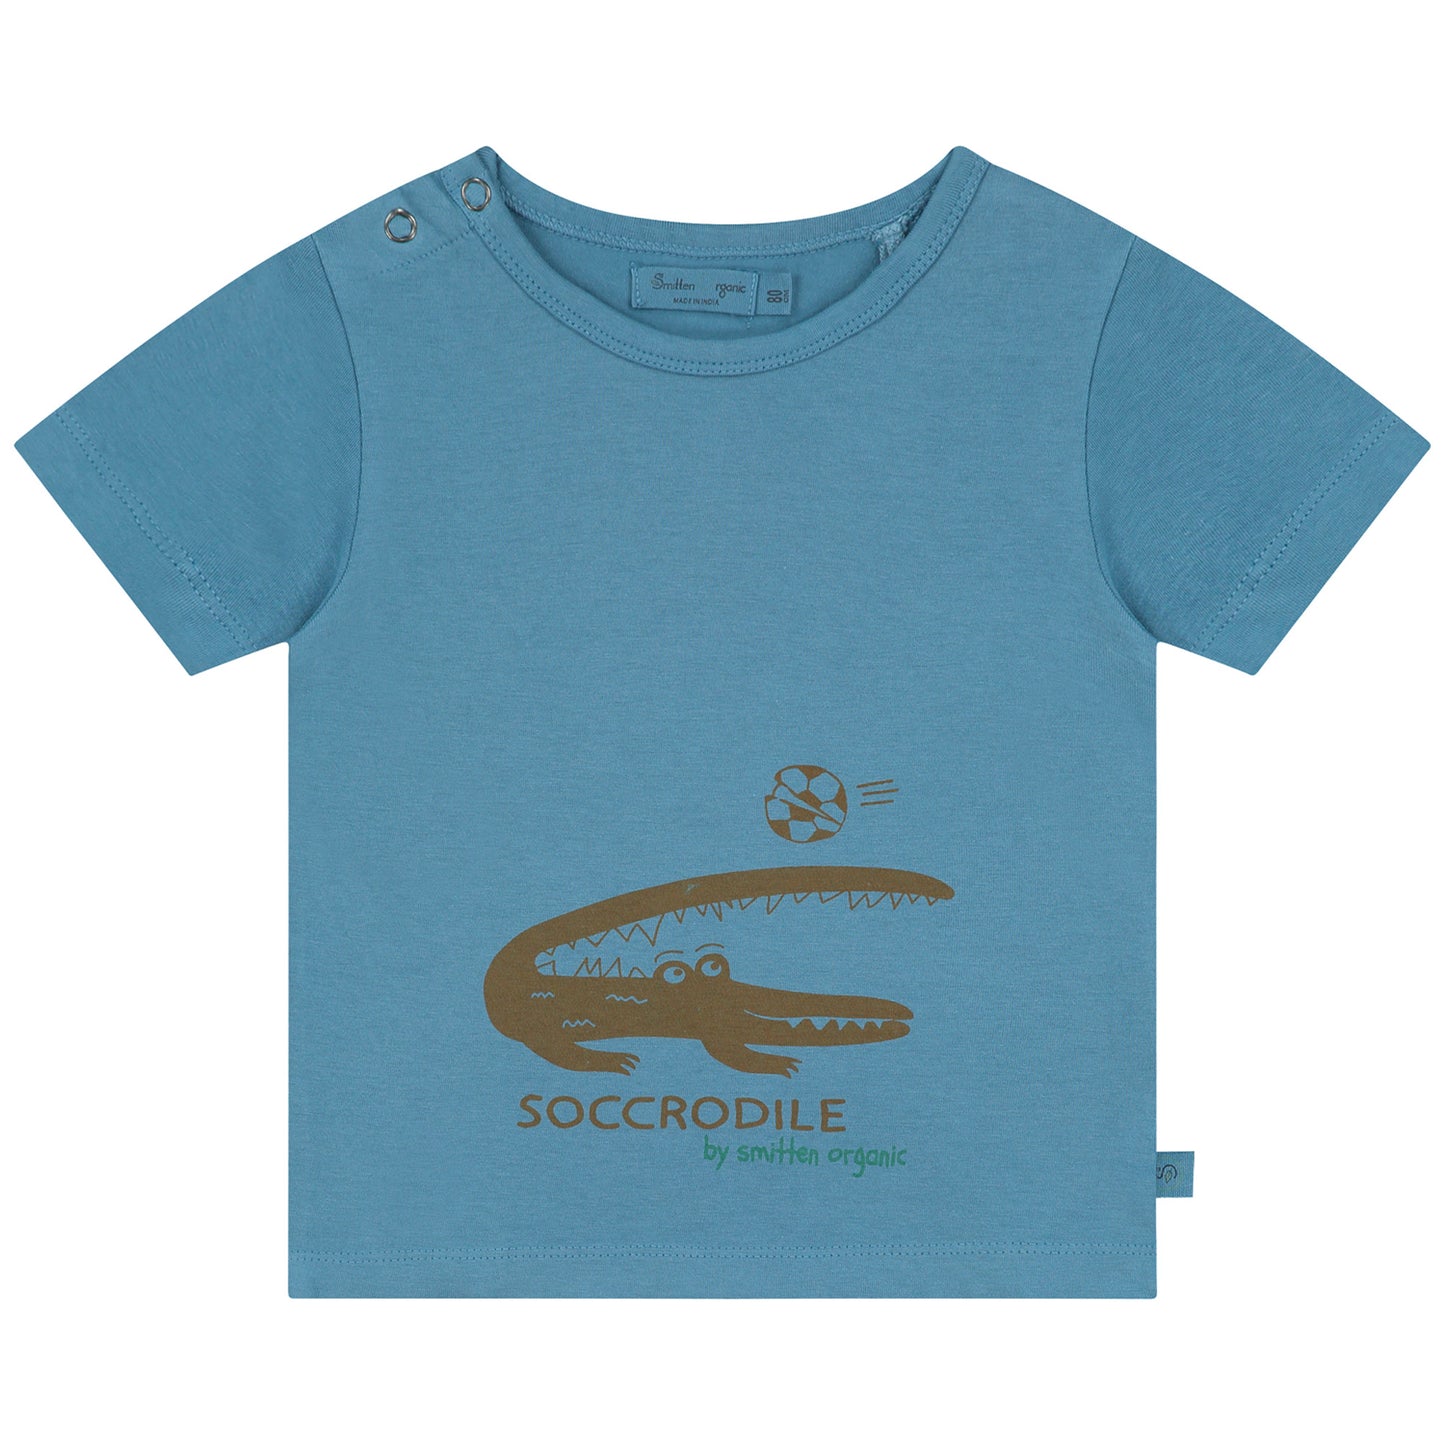 Crocodile playing soccor Unisex T-shirt